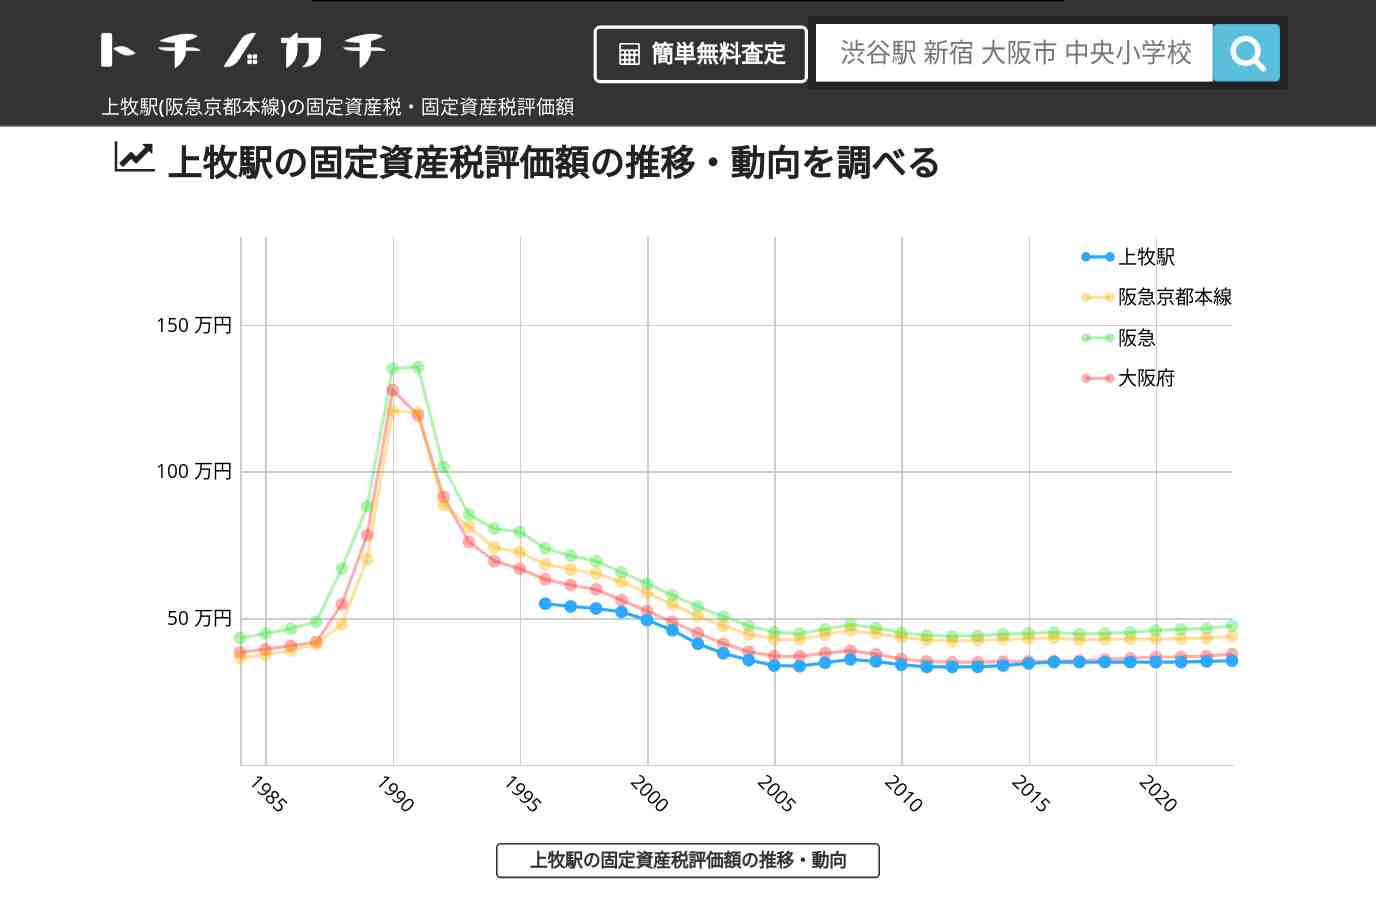 上牧駅(阪急京都本線)の固定資産税・固定資産税評価額 | トチノカチ